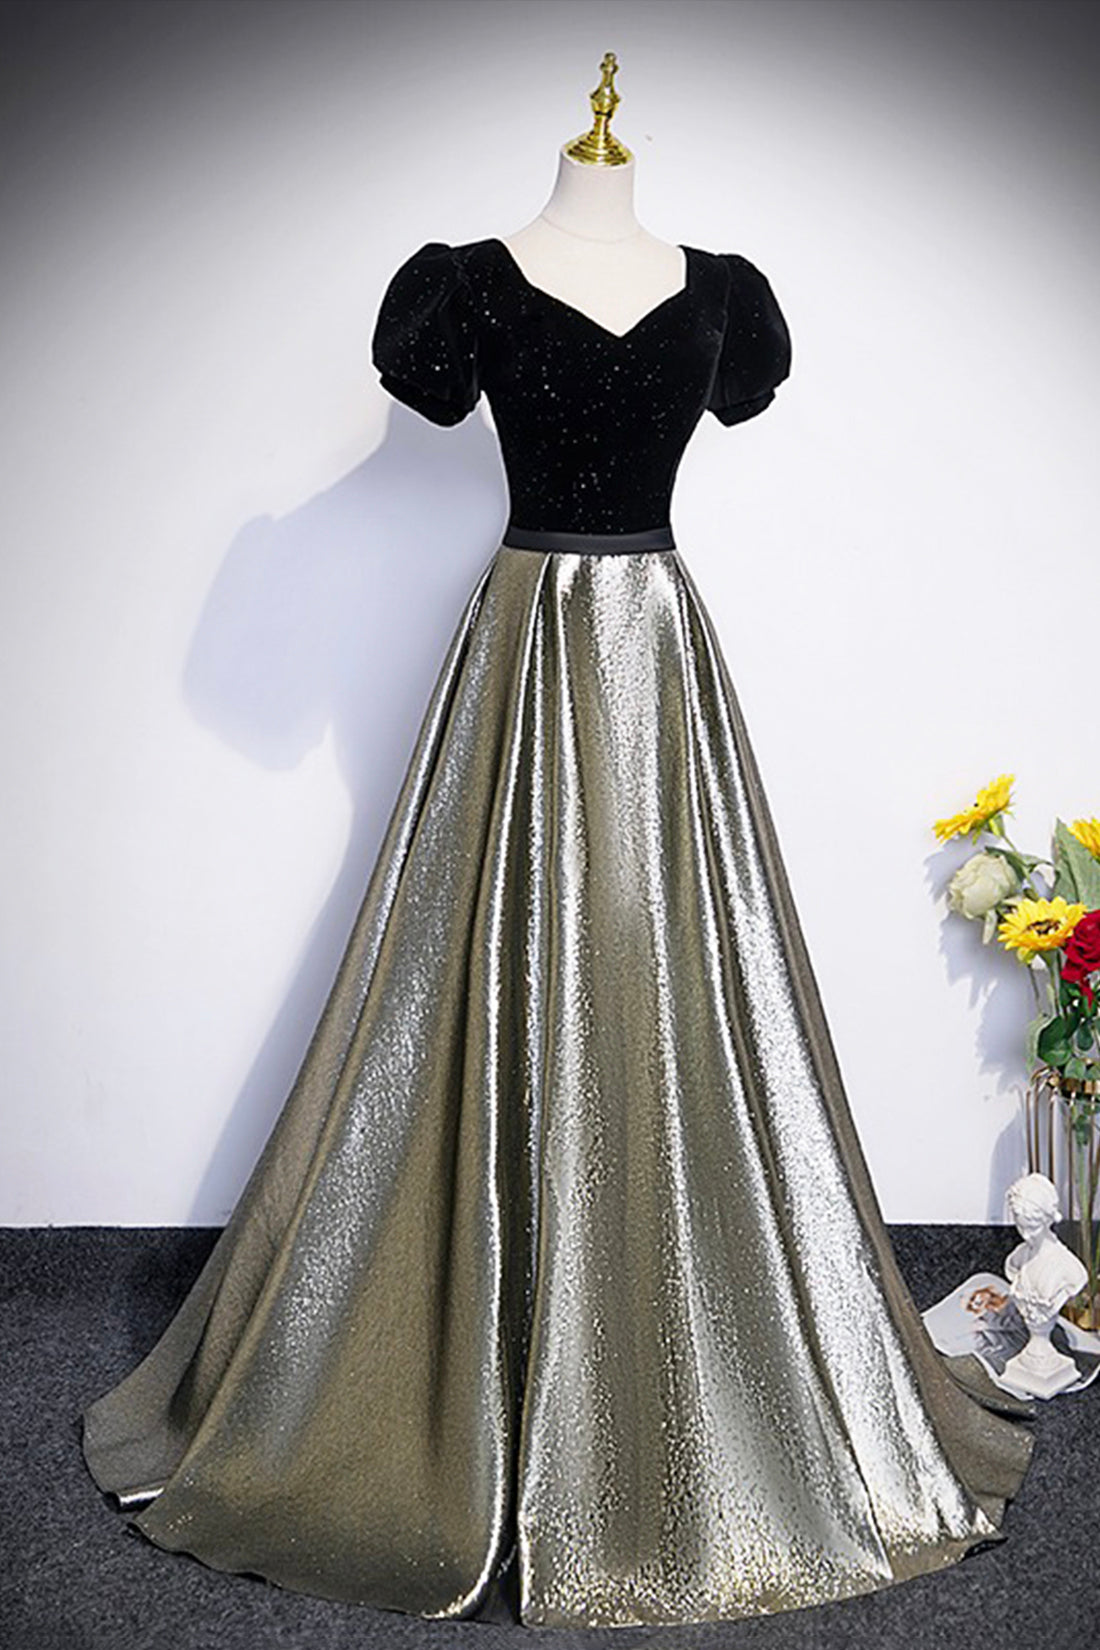 Black Velvet and Shiny Satin Long Prom Dress, Beautiful A-Line Evening Party Dress